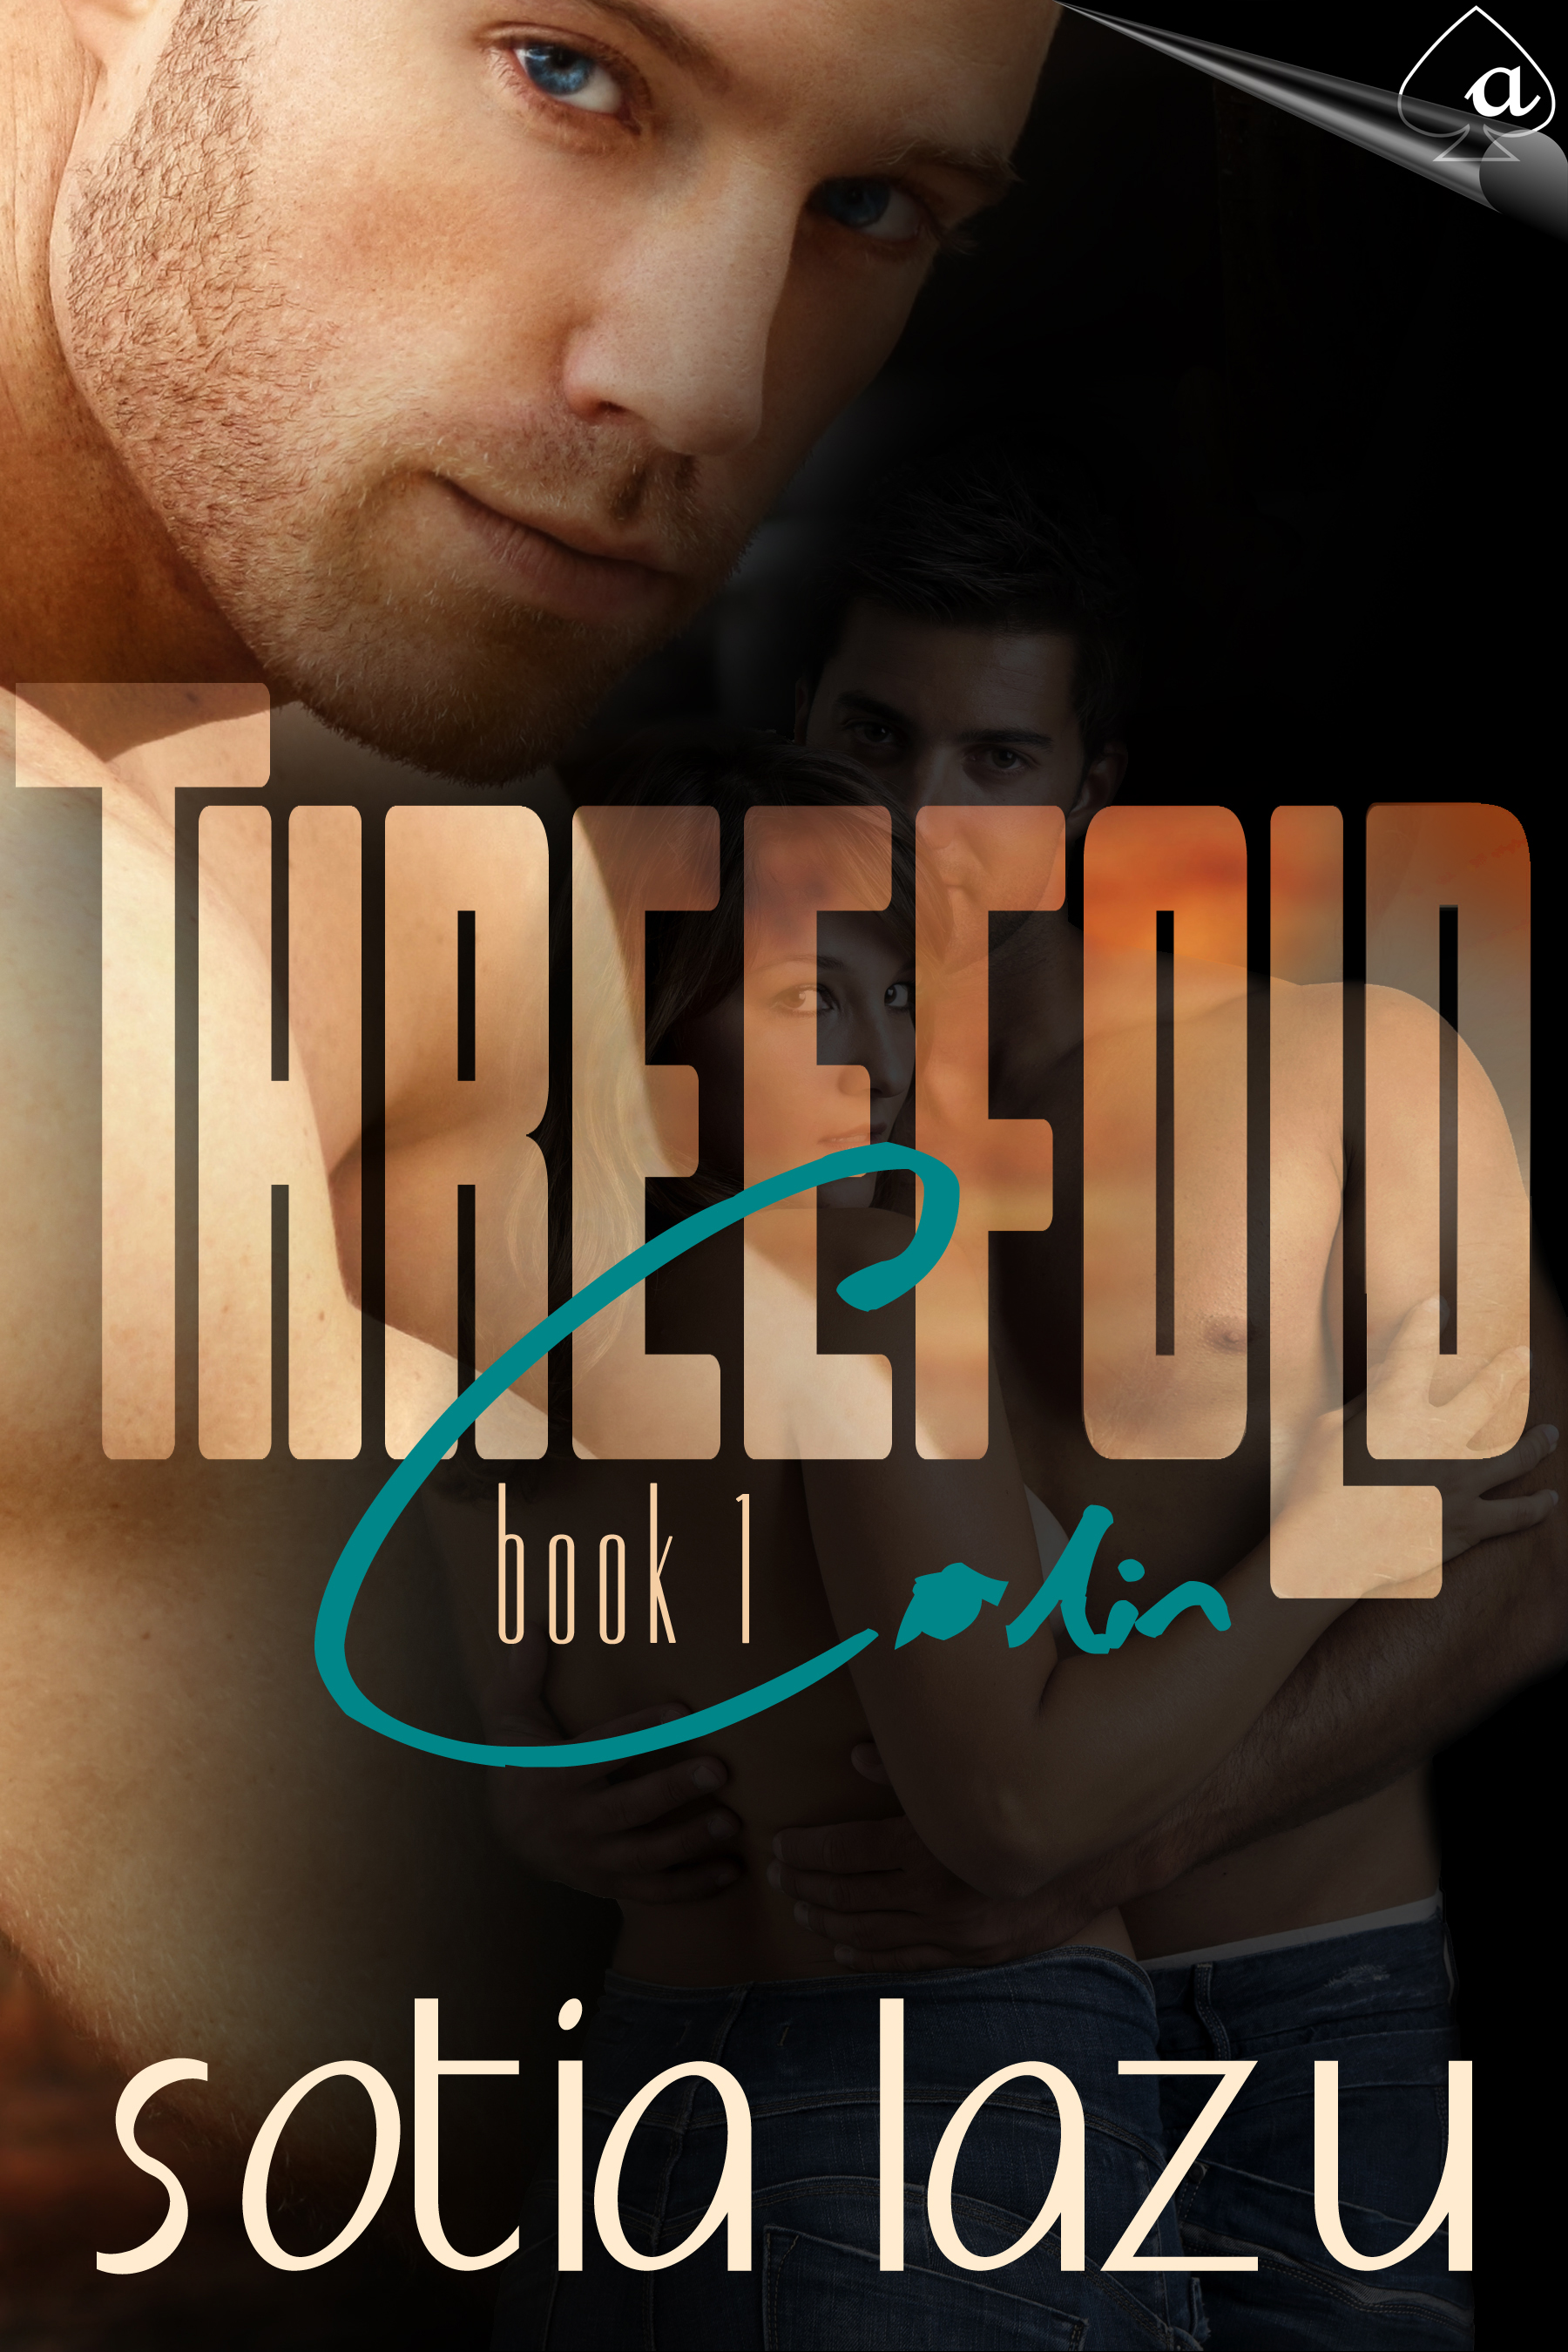 Colin - Threefold, Book 1